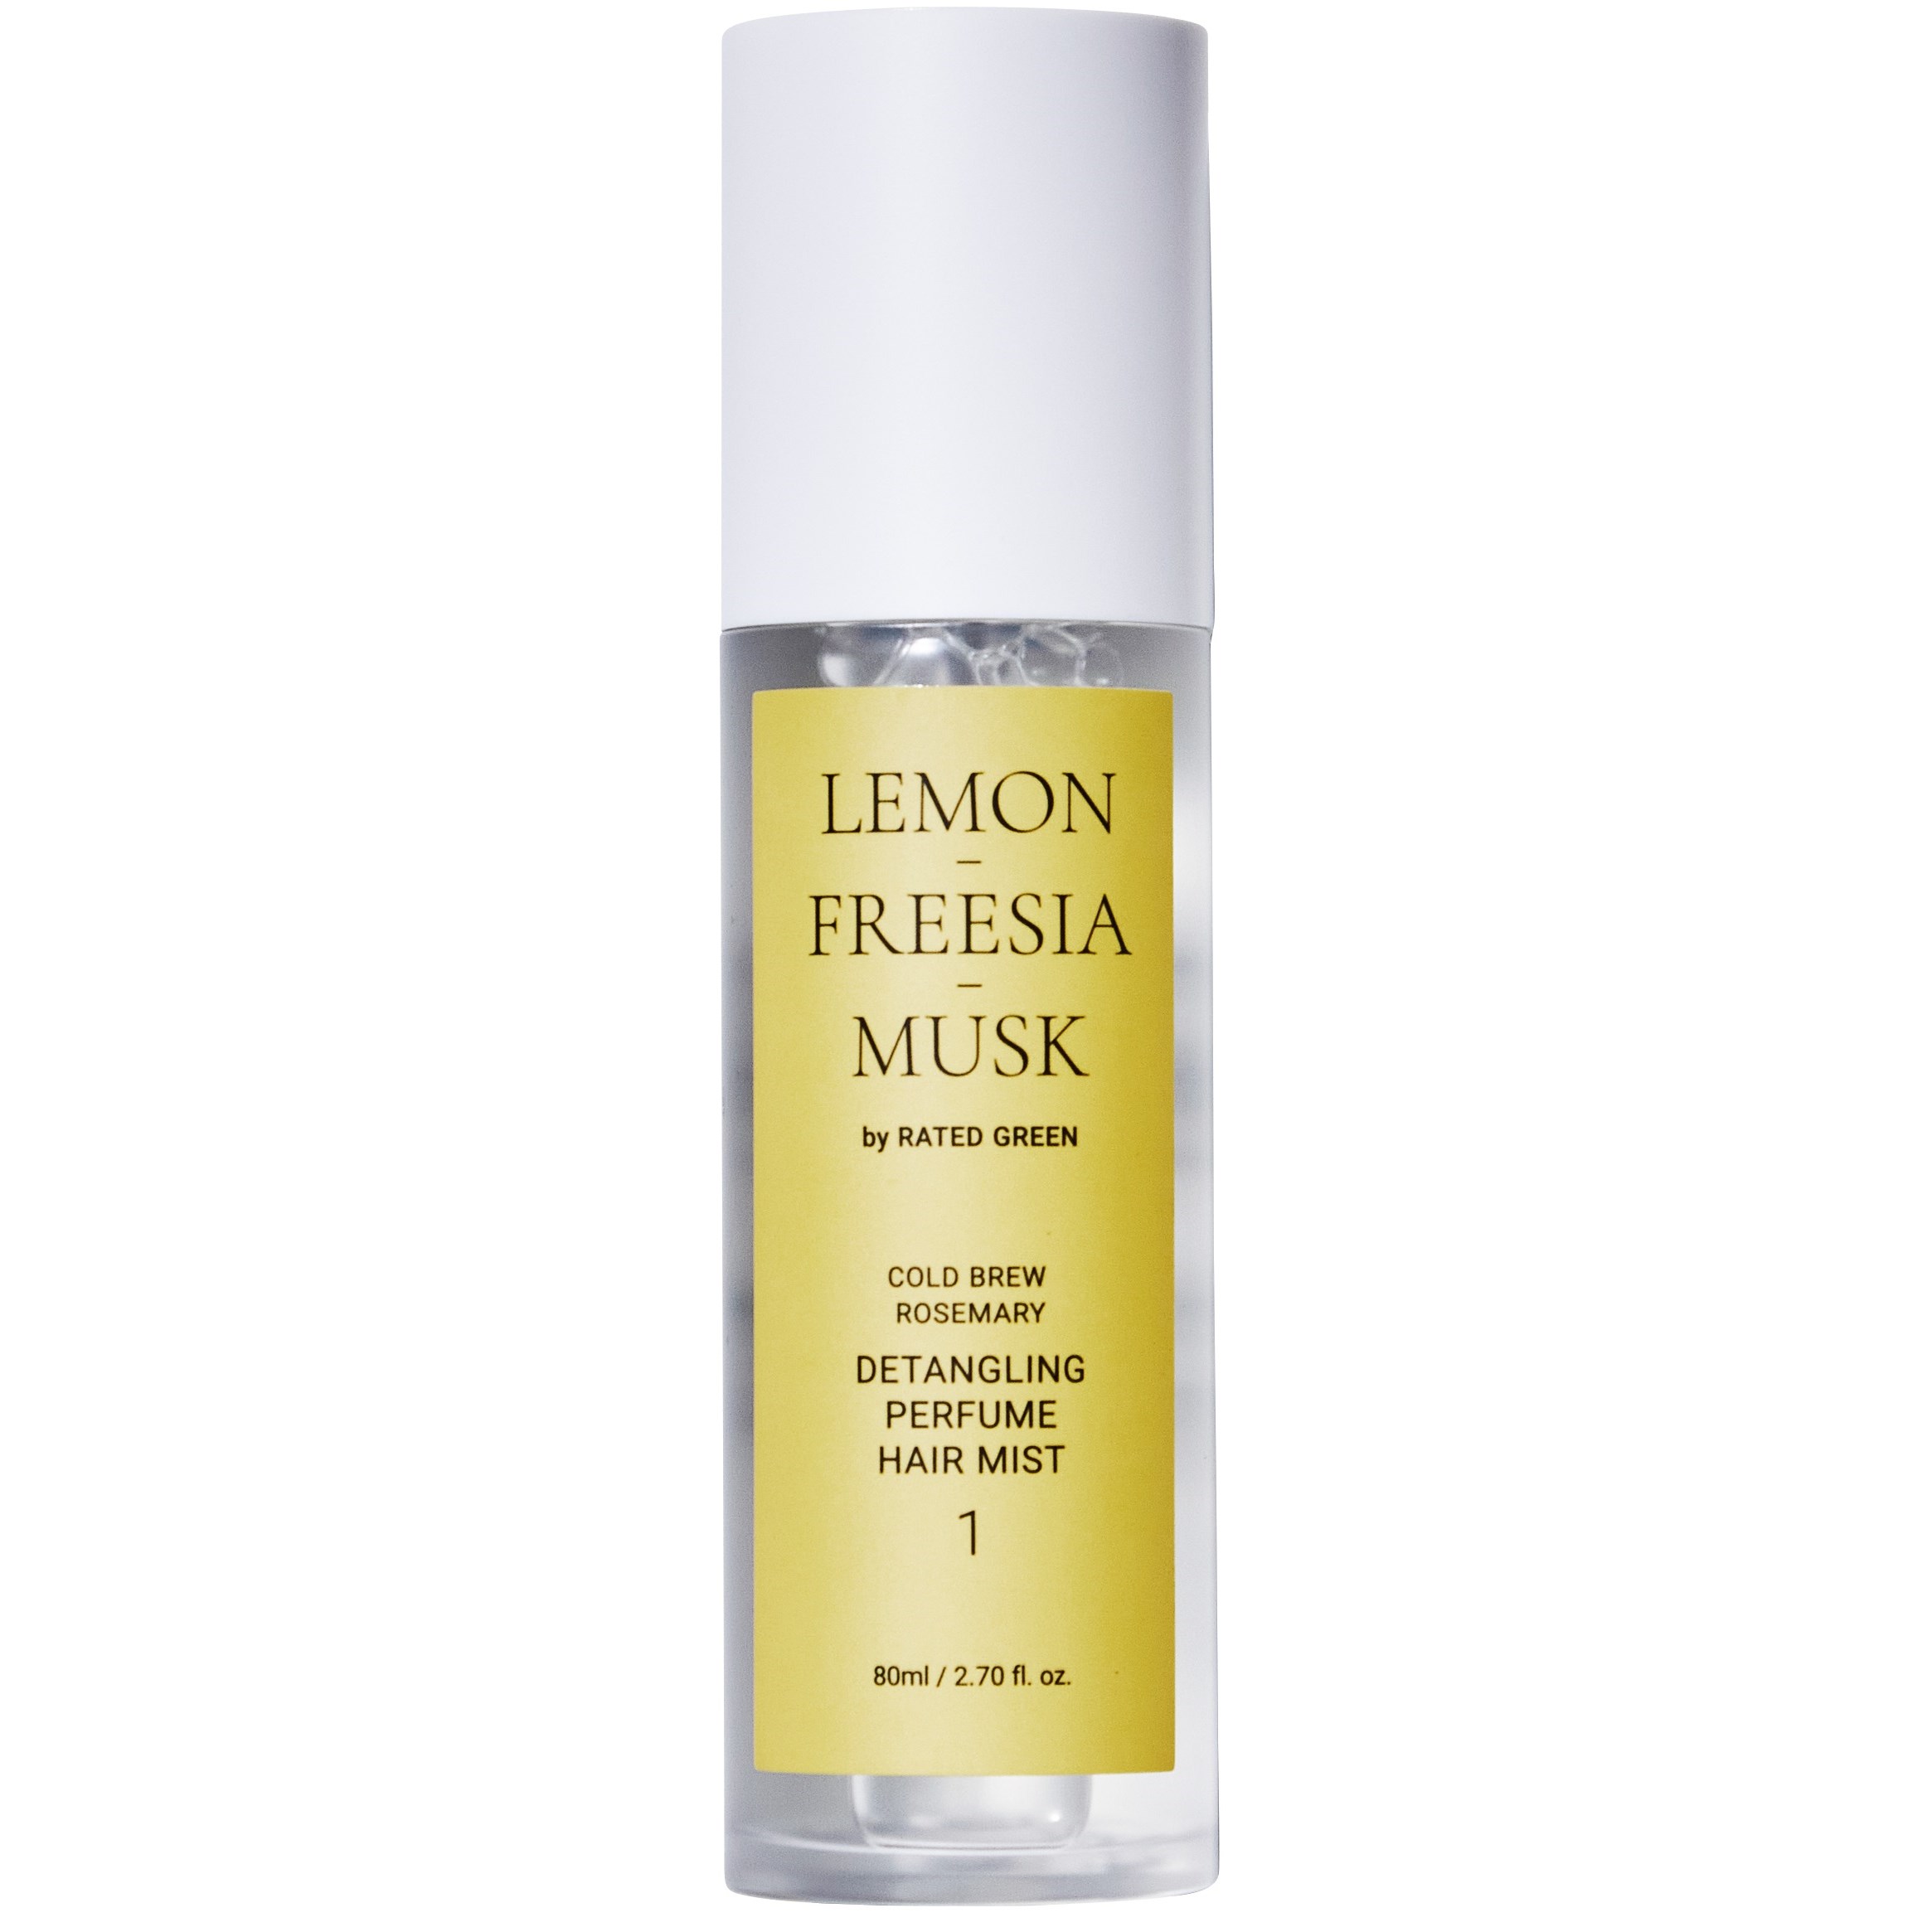 Rated Green Detangling Perfume Hair Mist 1 Lemon-Freesia-Musk 80